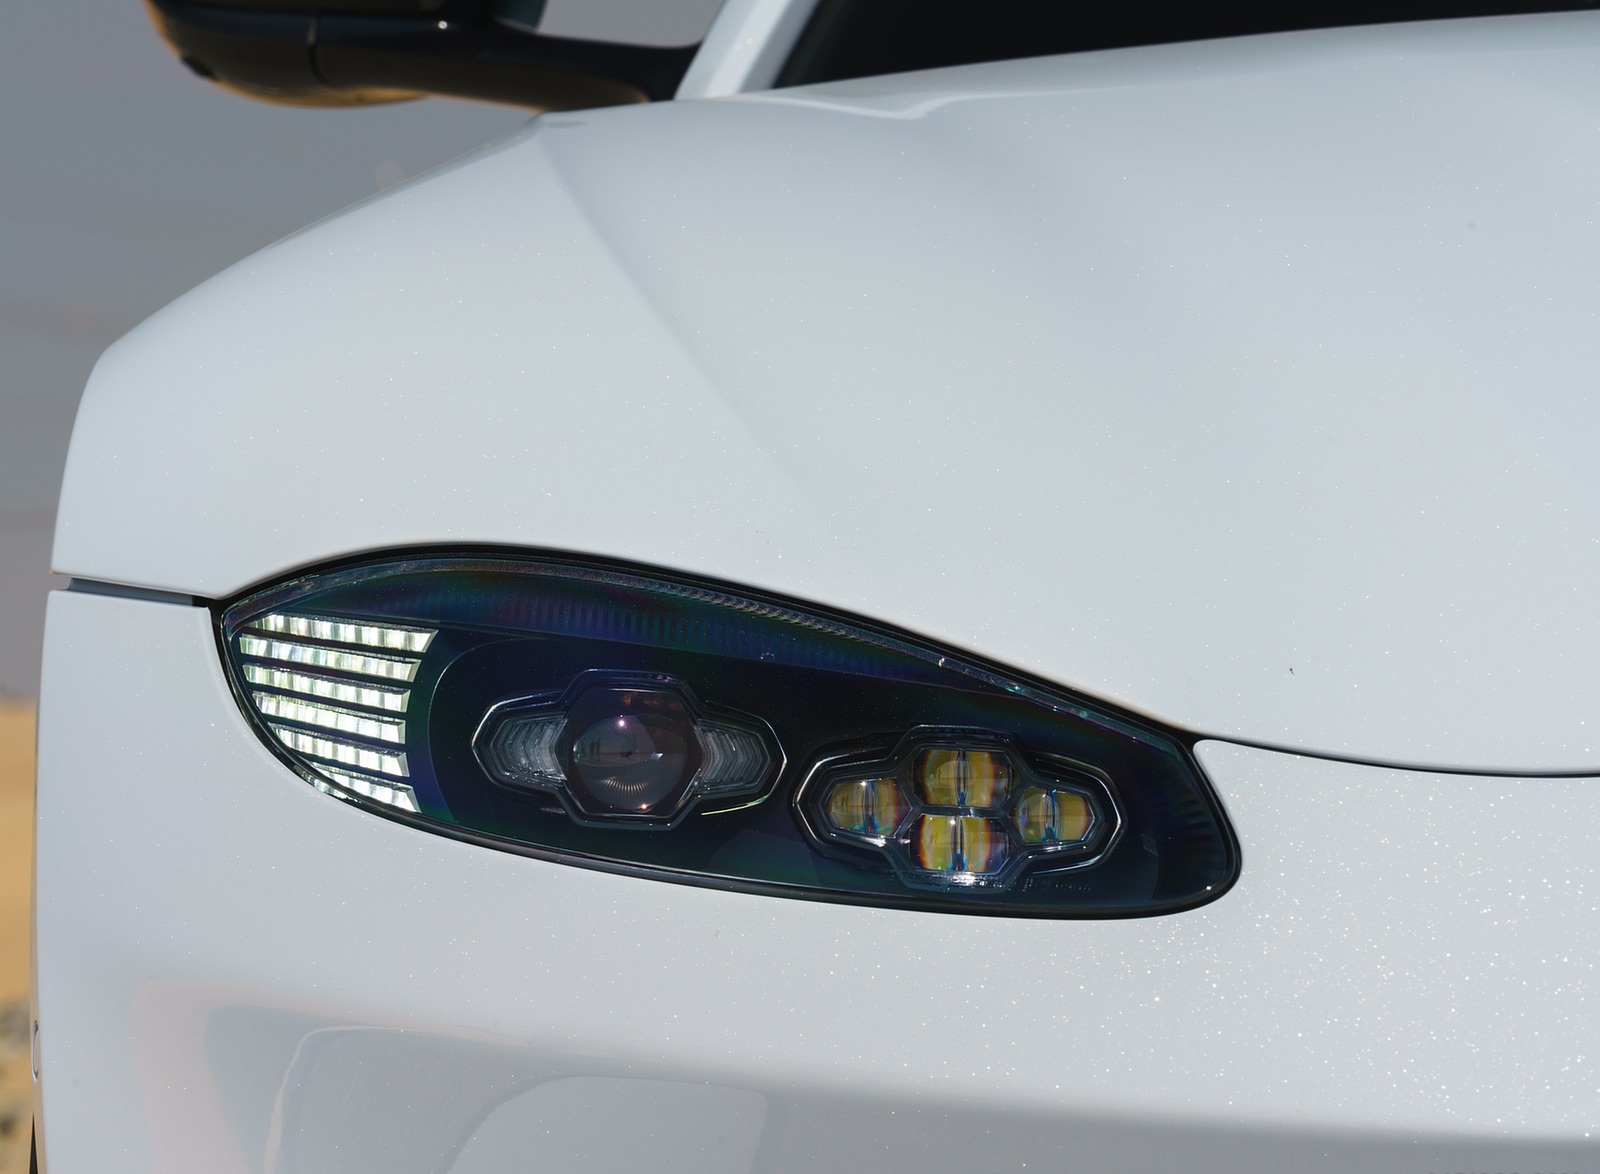 2019 Aston Martin Vantage (Color: White Stone) Headlight Wallpapers #108 of 120